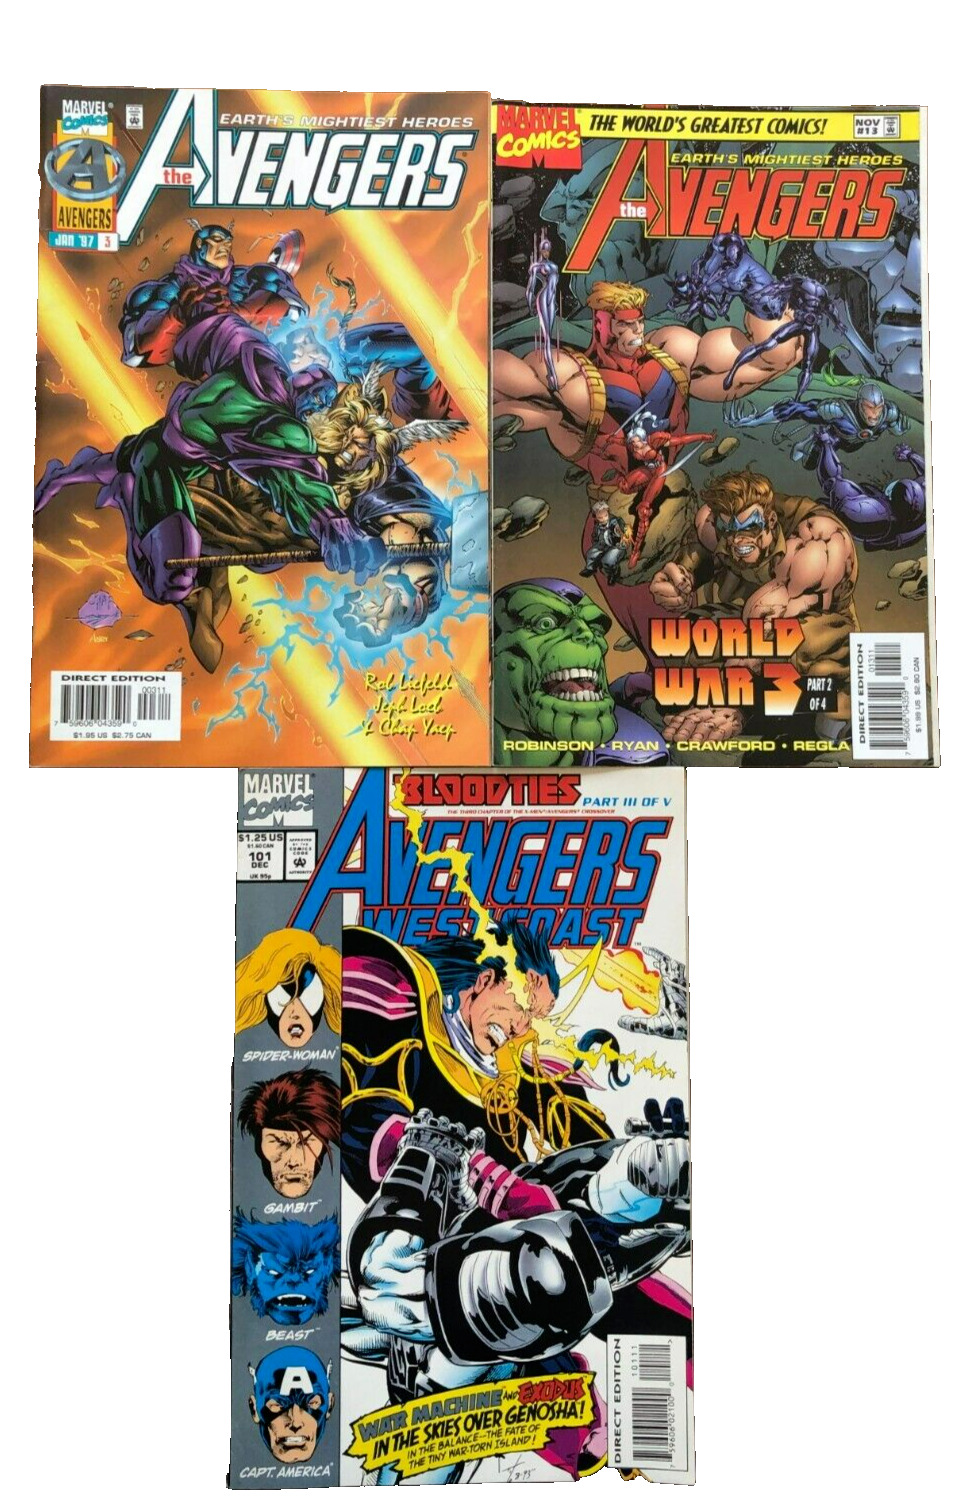 Lot of 3 Marvel Comic Books AVENGERS 3 • Avengers 13 • West Coast Avengers 101